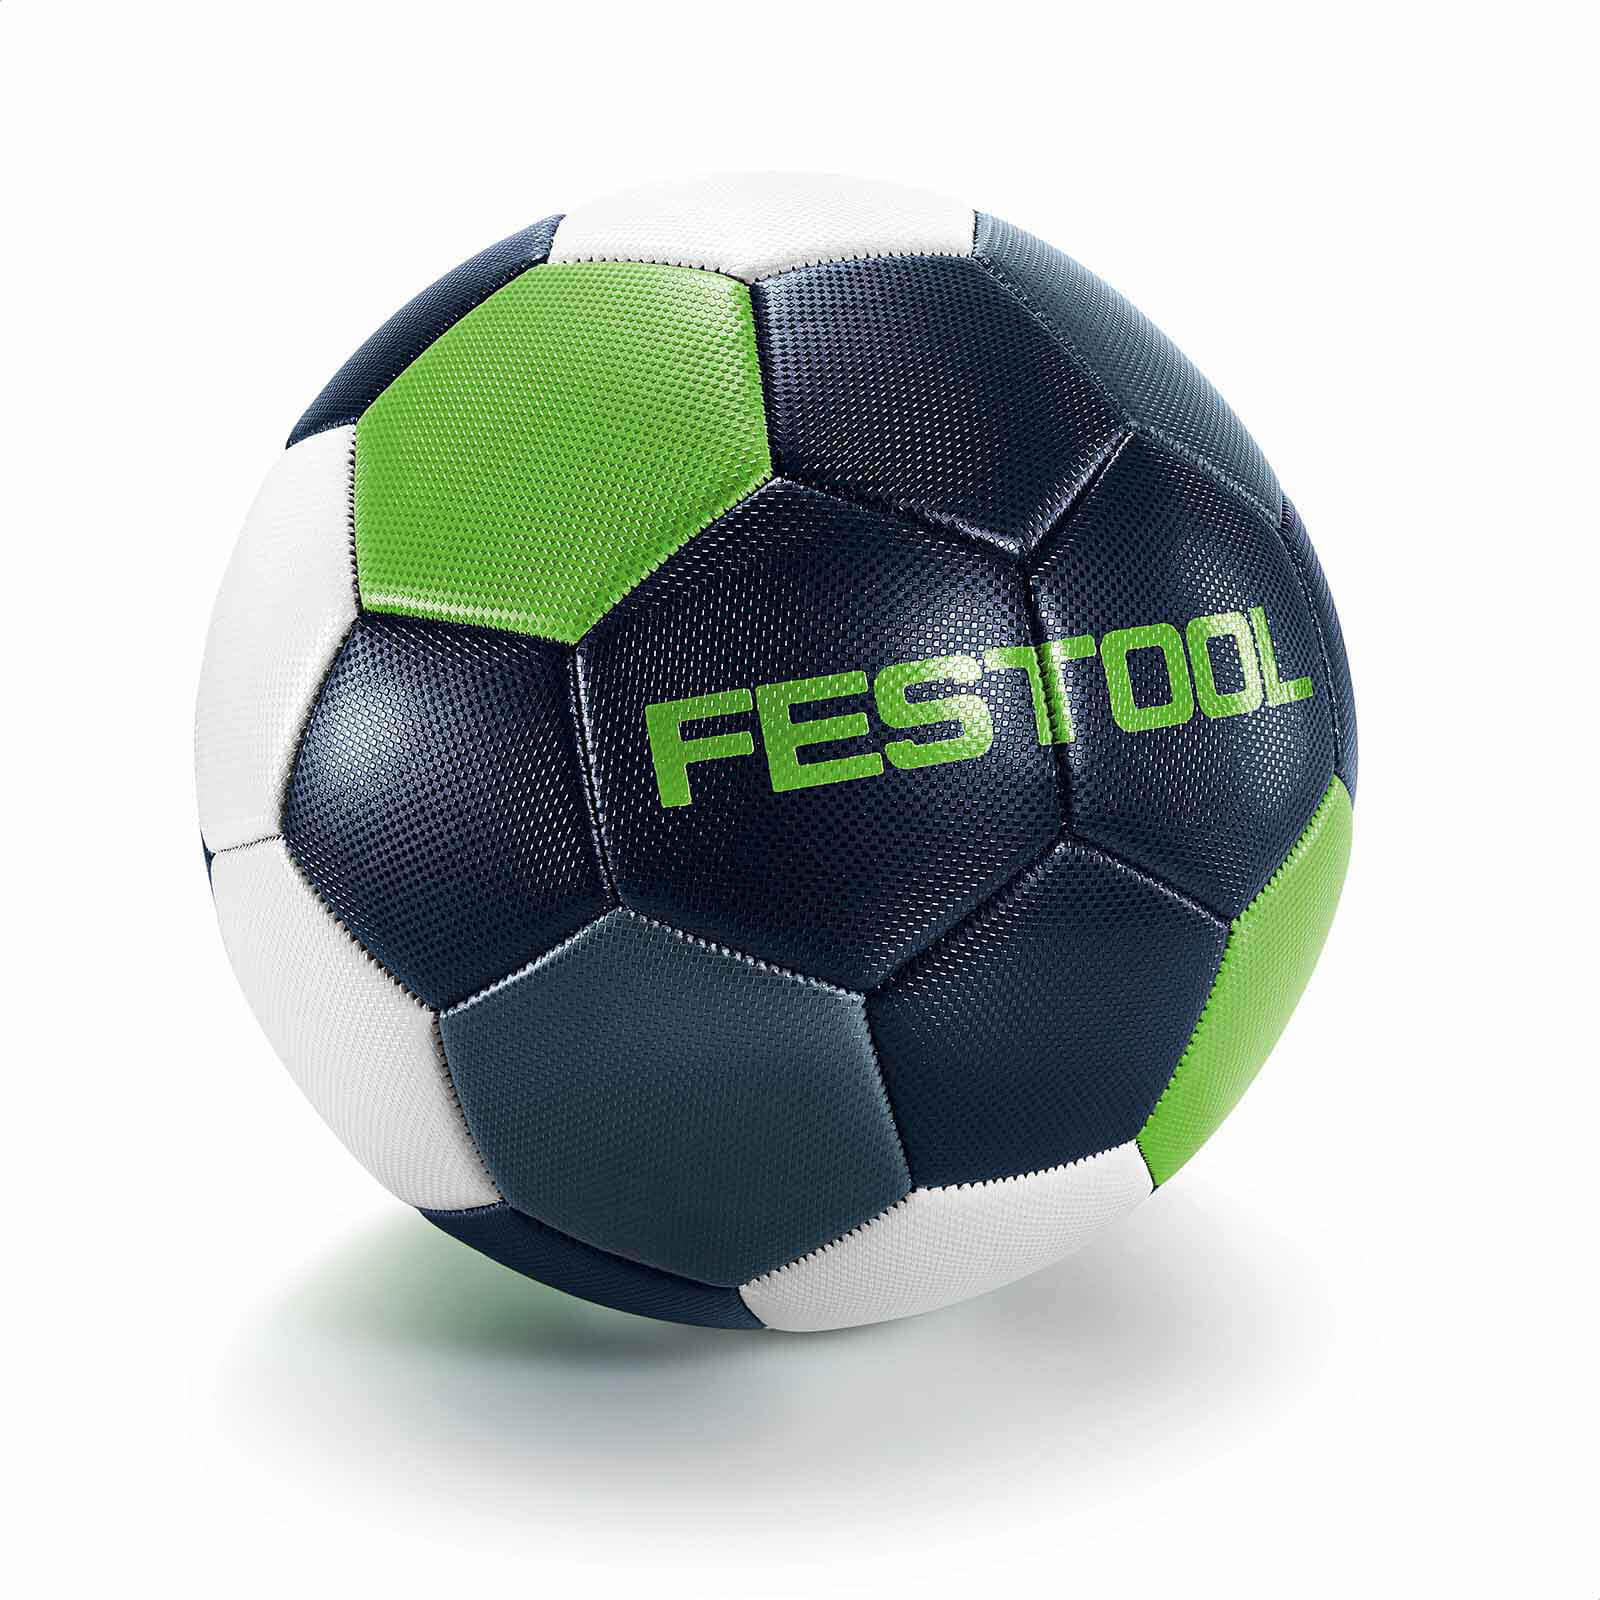 Image of Festool Fan SOC-FT1 Soccer Football